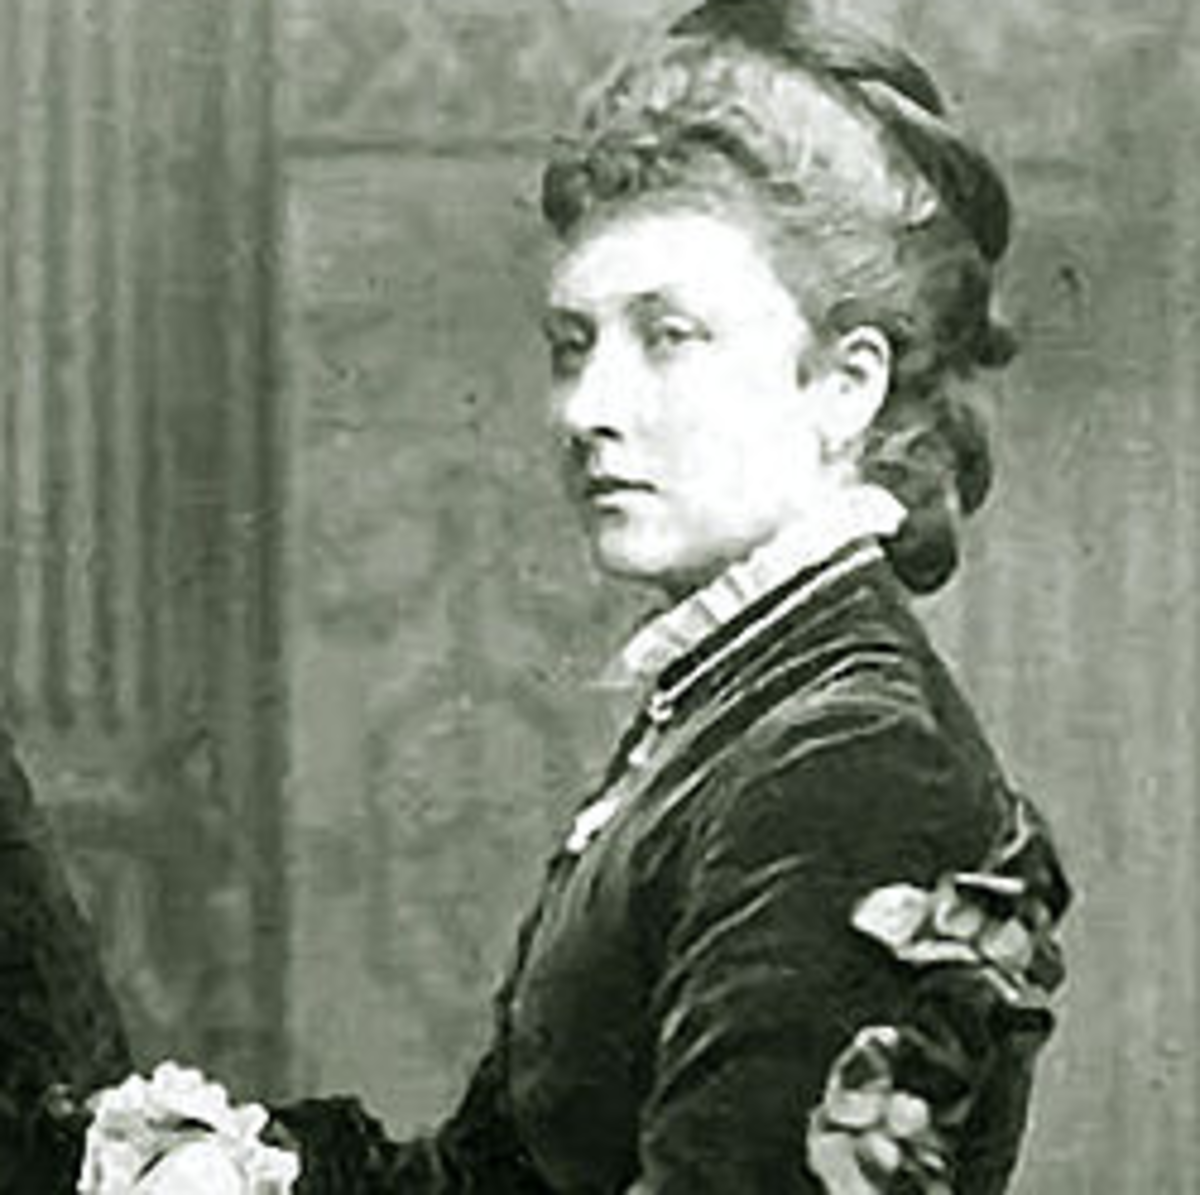 Did Queen Victoria's daughter have an illegitimate child?